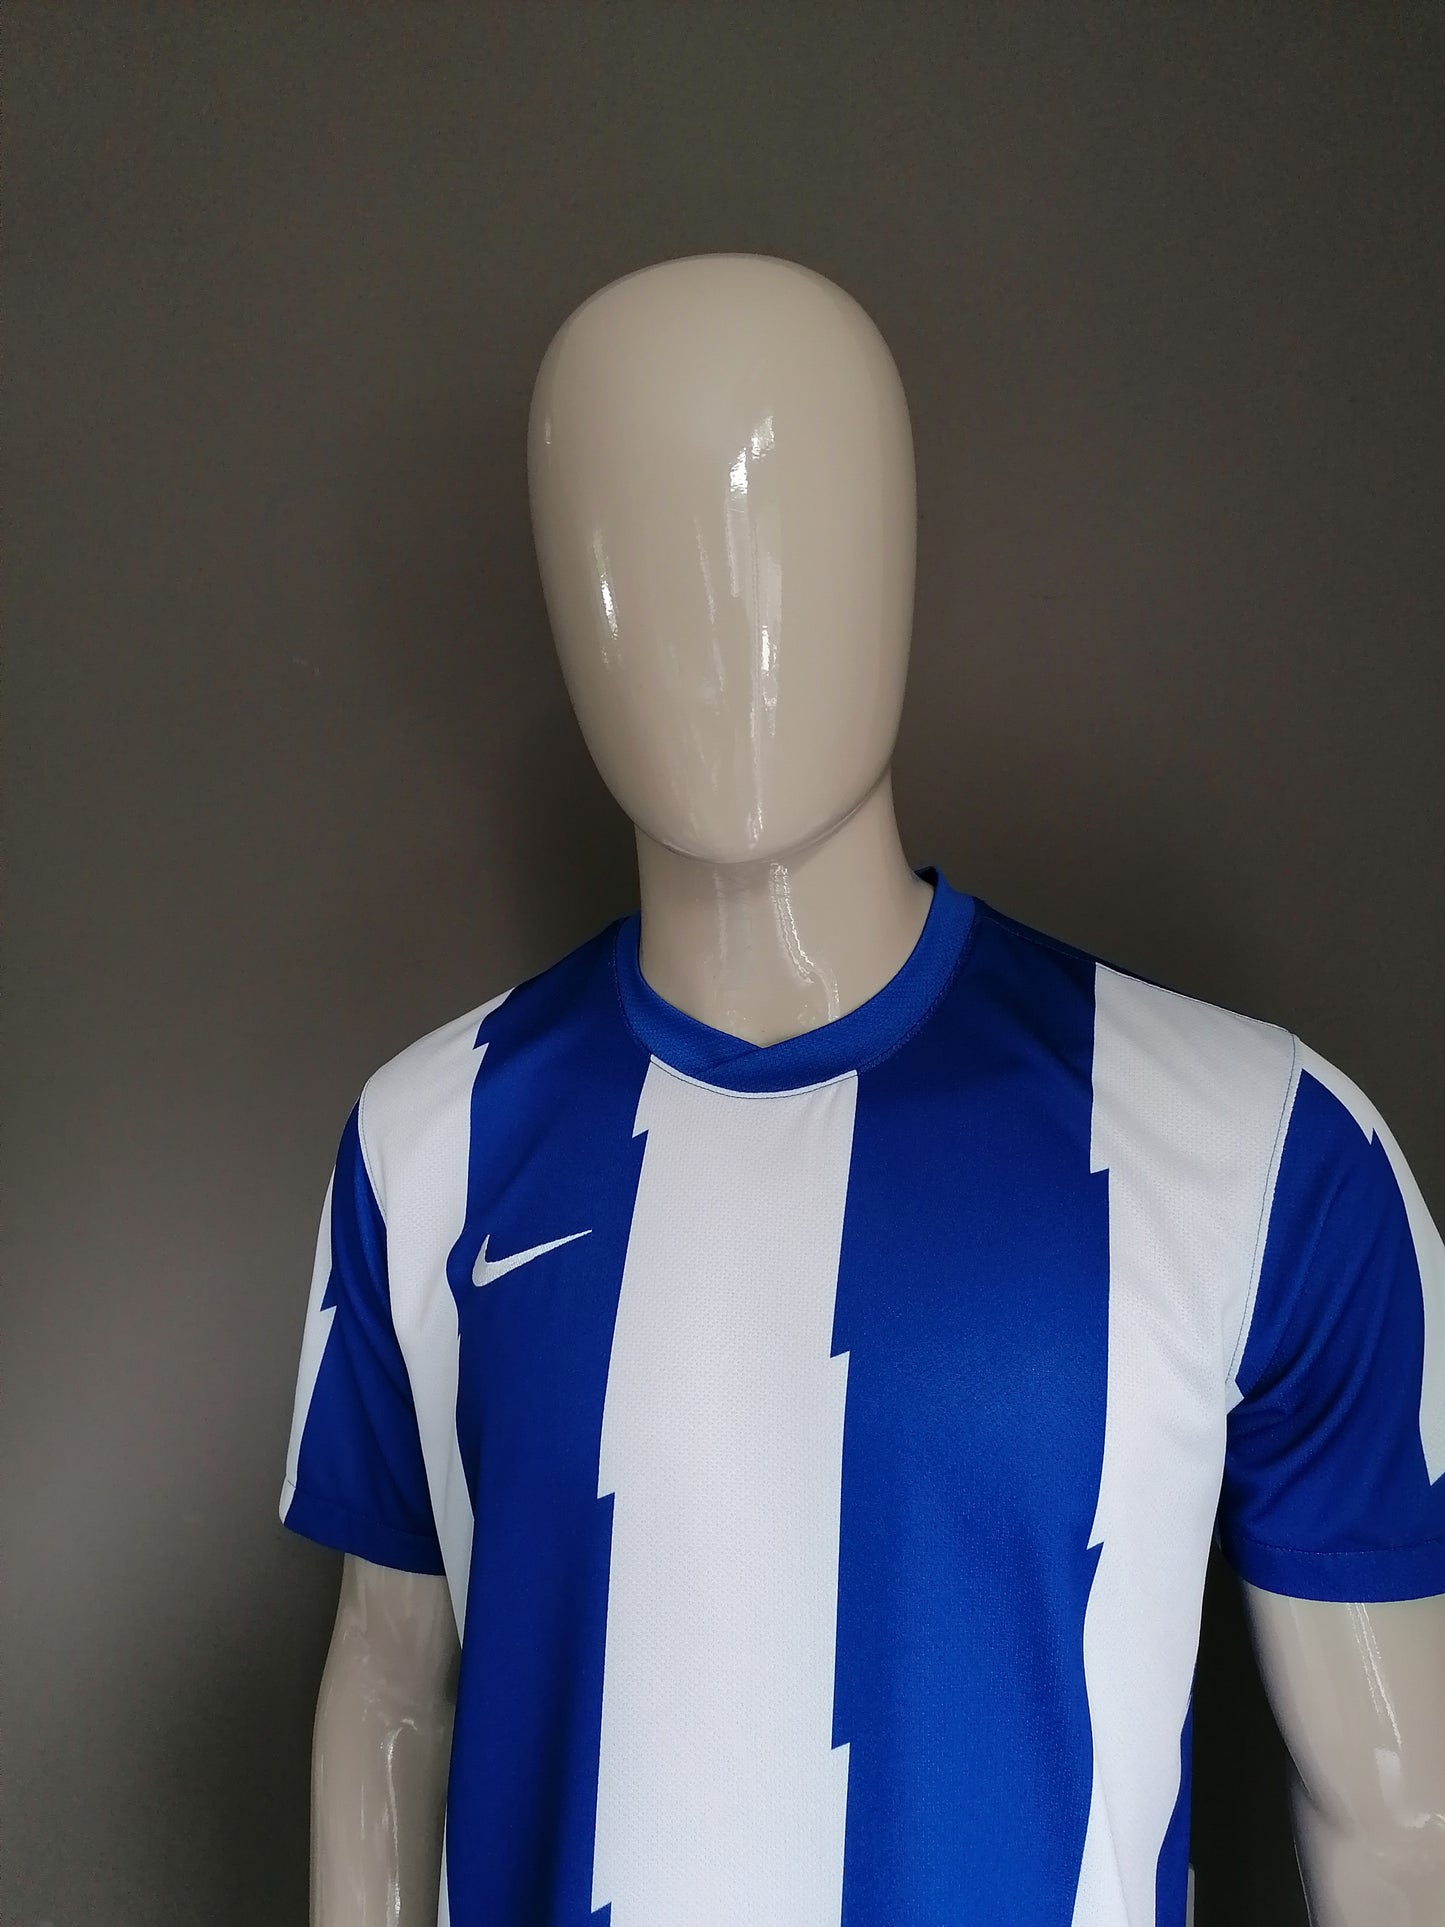 Camisa deportiva de Nike Soccer "Oroz". Motivo blanco azul. Talla L.